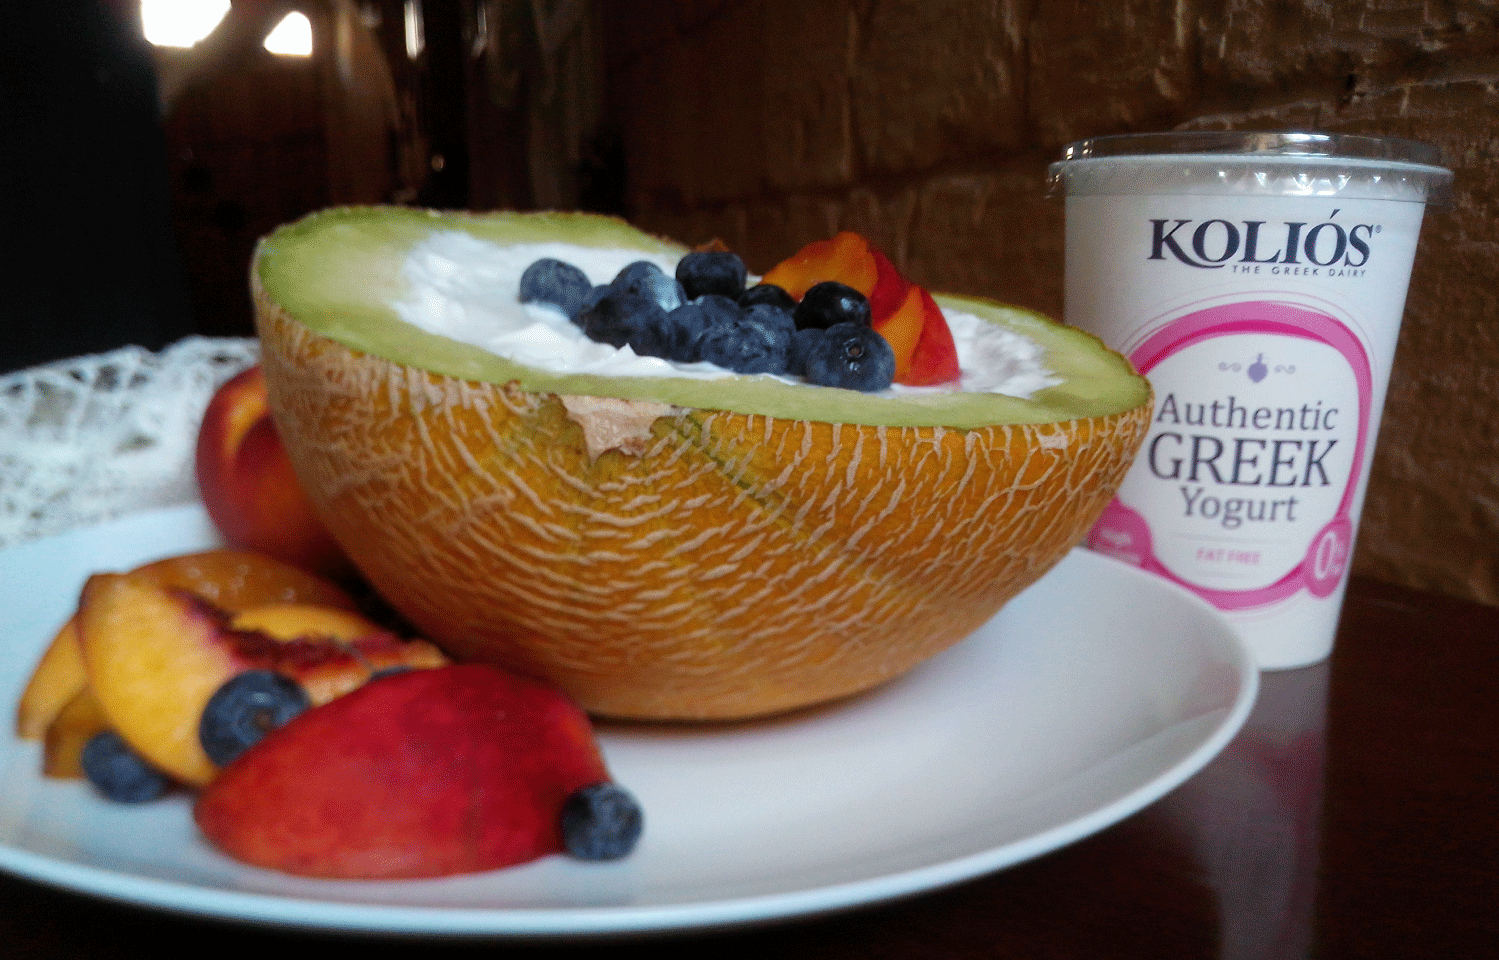 Blueberries and Kolios greek yogurt mix in fresh Cantaloupe bowl